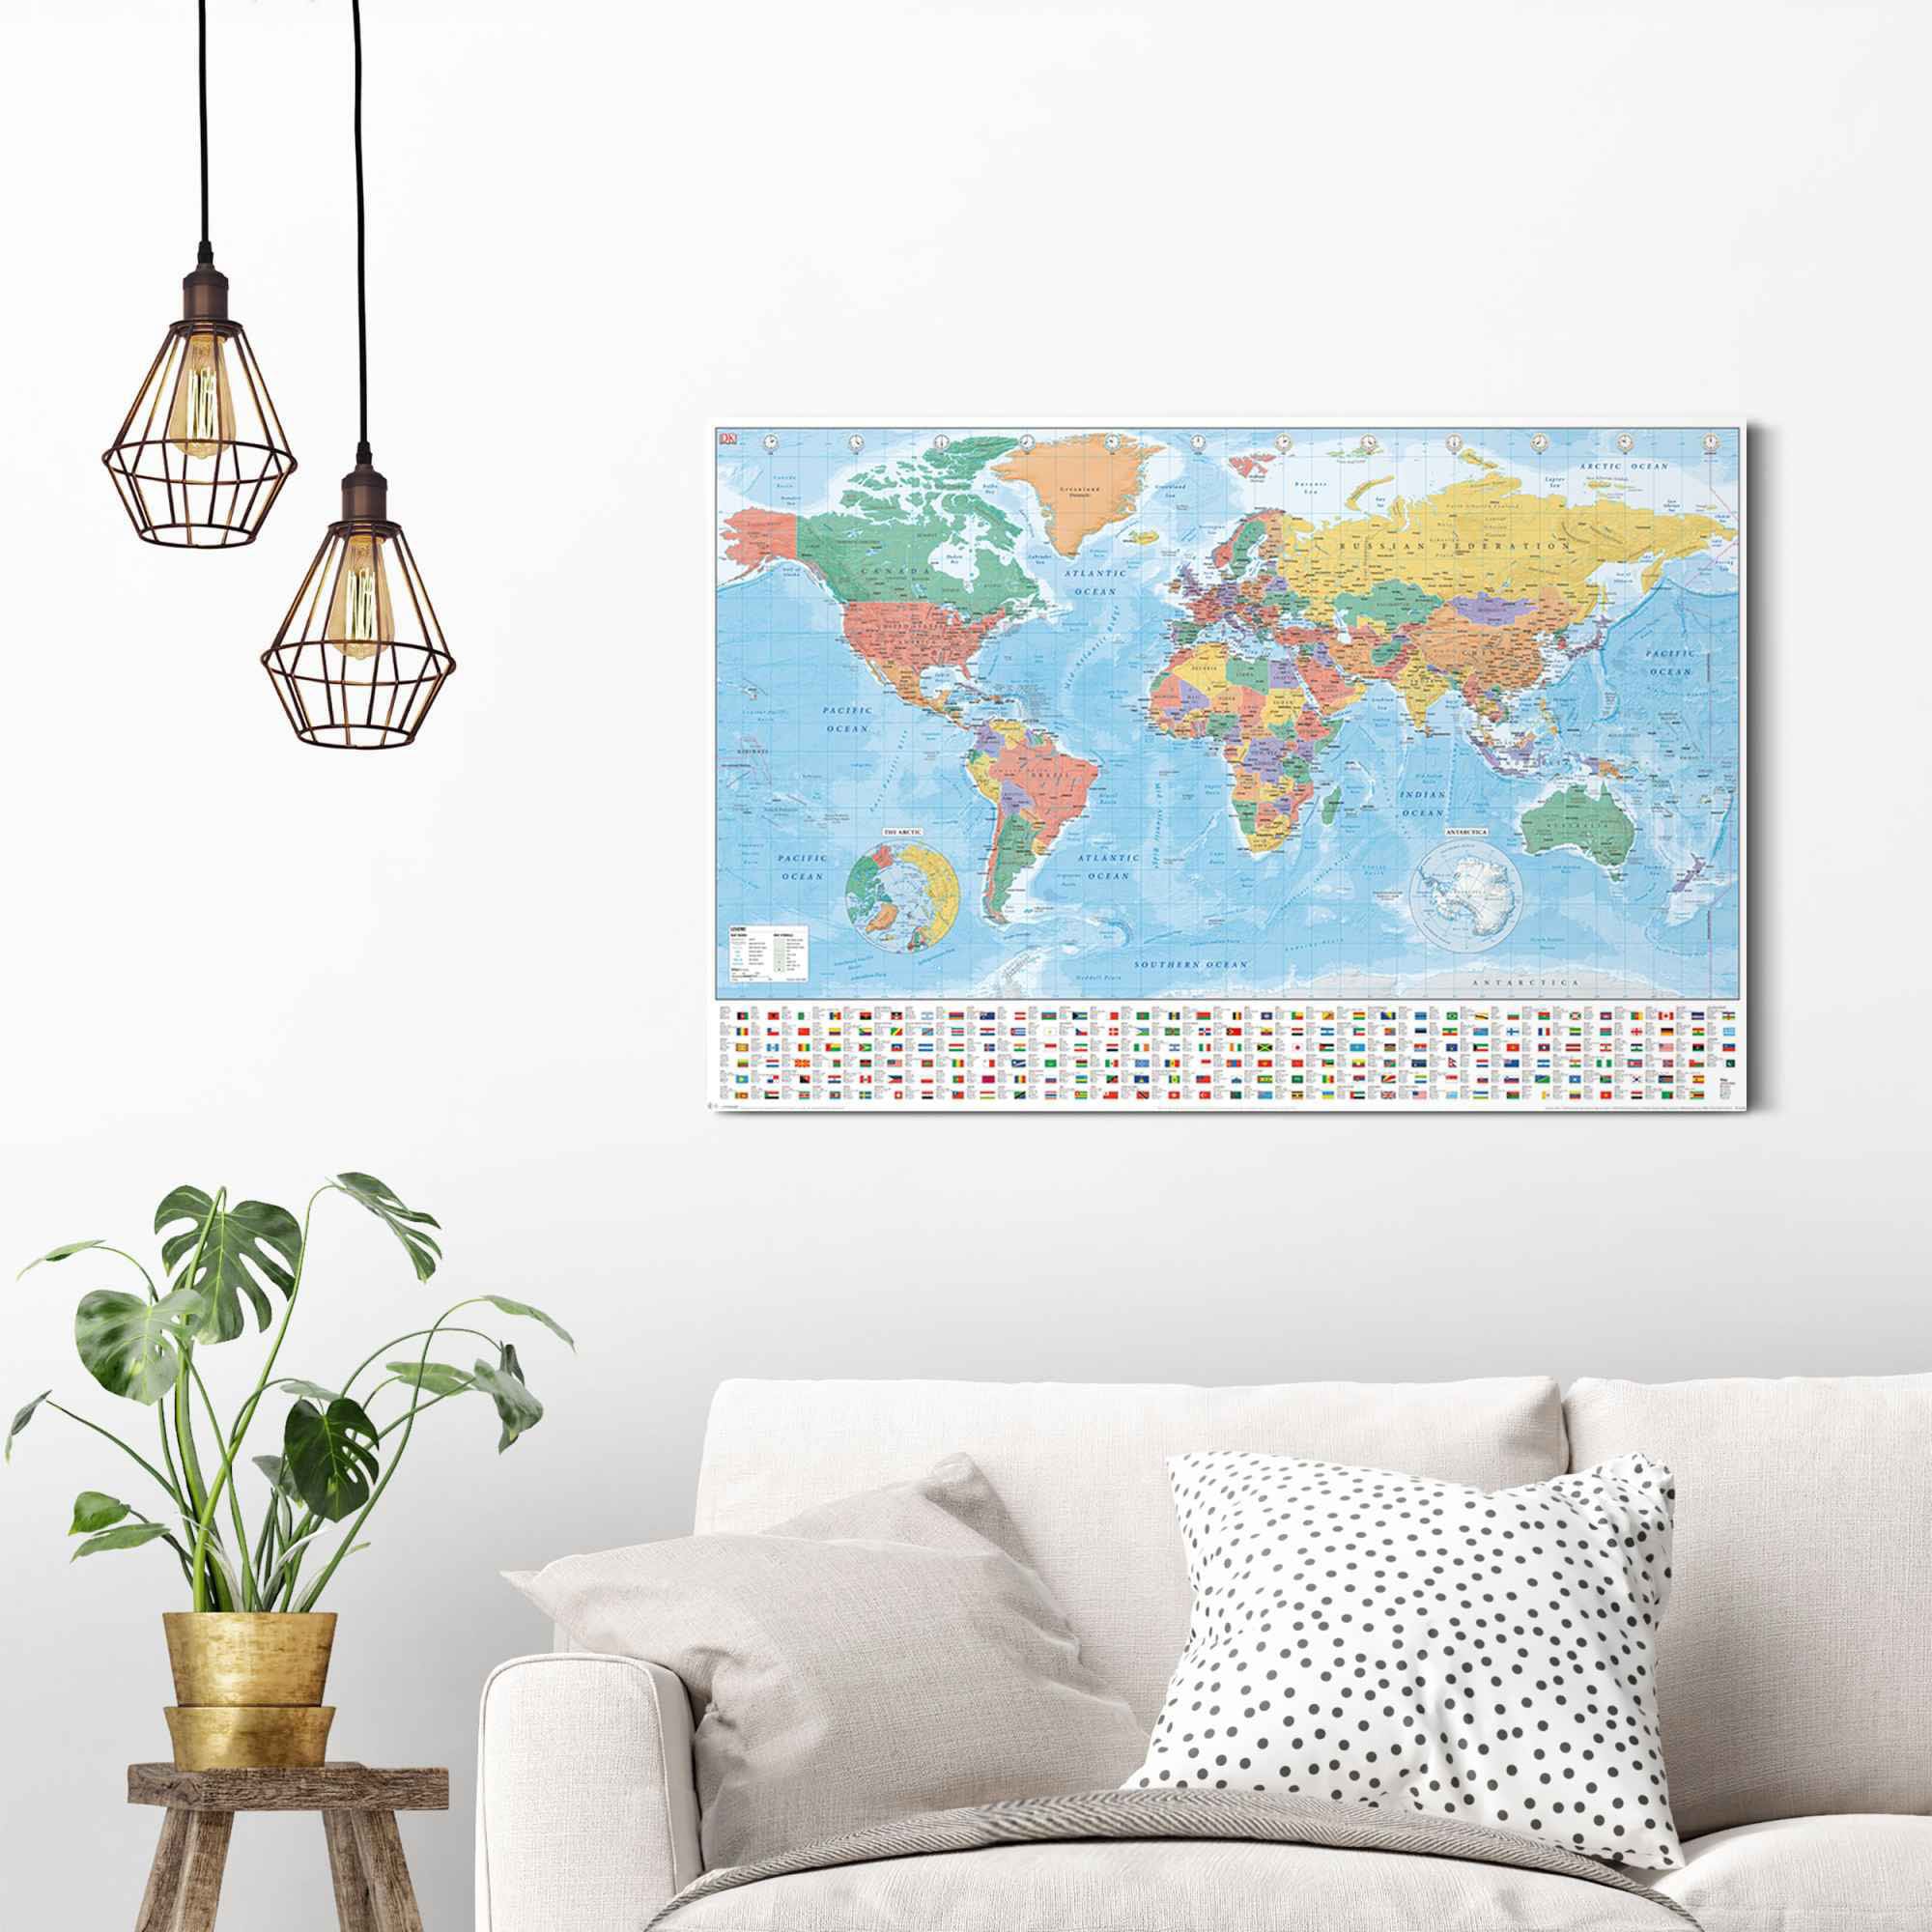 - St.) - Kontinente Weltkarte günstig kaufen »Wandbild Weltkarte, Landkarte Flaggen«, Reinders! (1 Wandbild